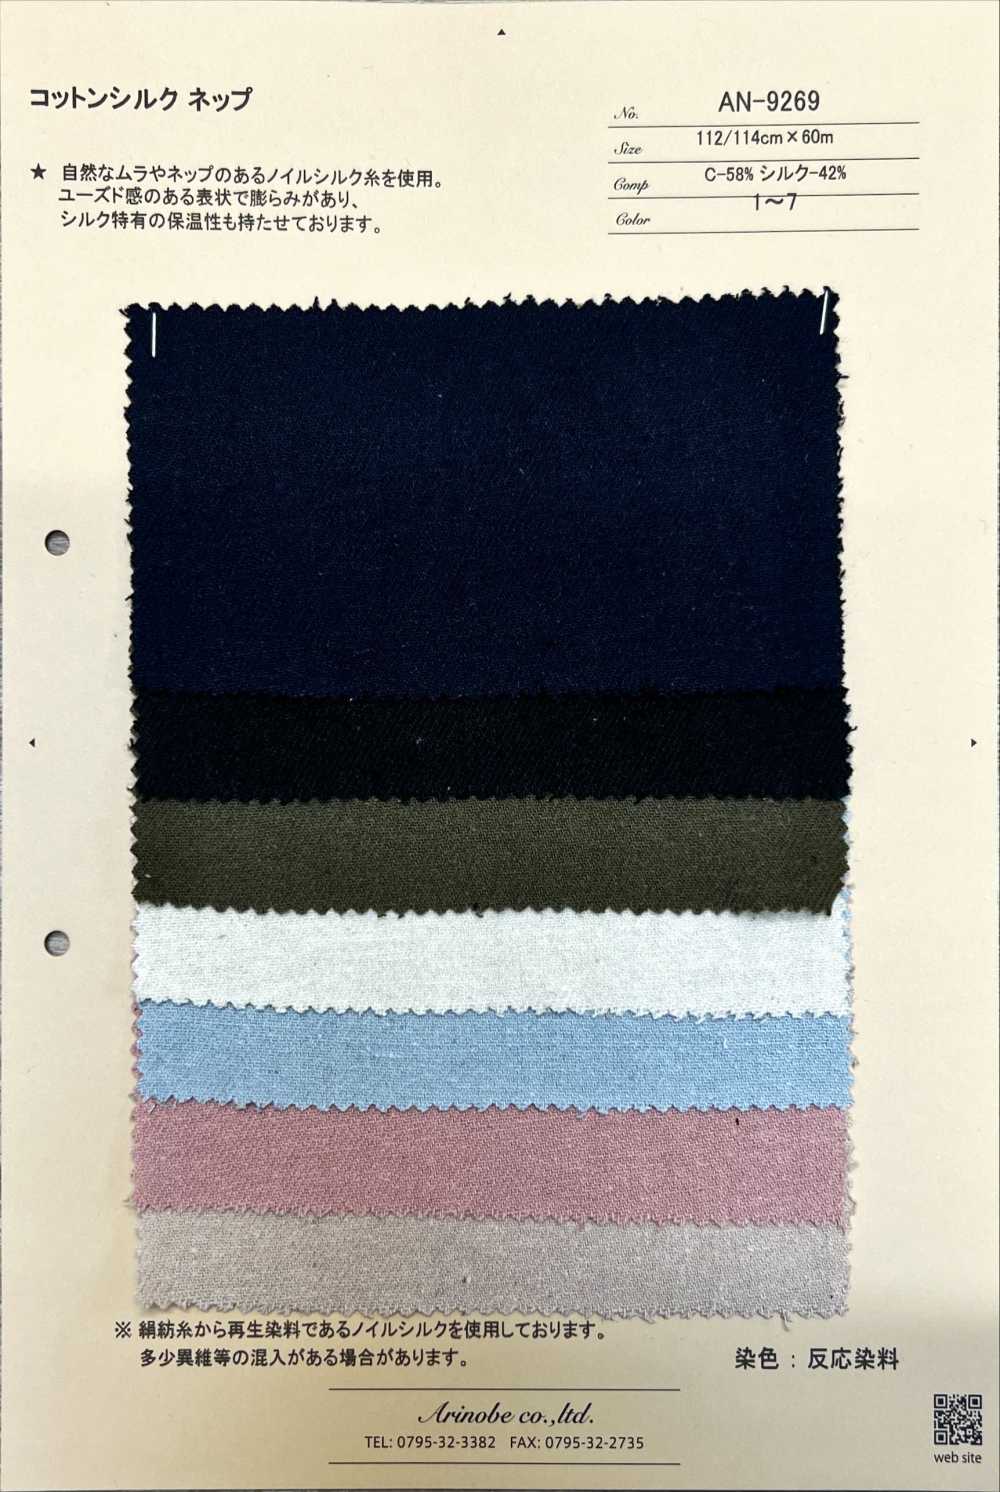 AN-9269 Nep De Seda De Algodón[Fabrica Textil] ARINOBE CO., LTD.